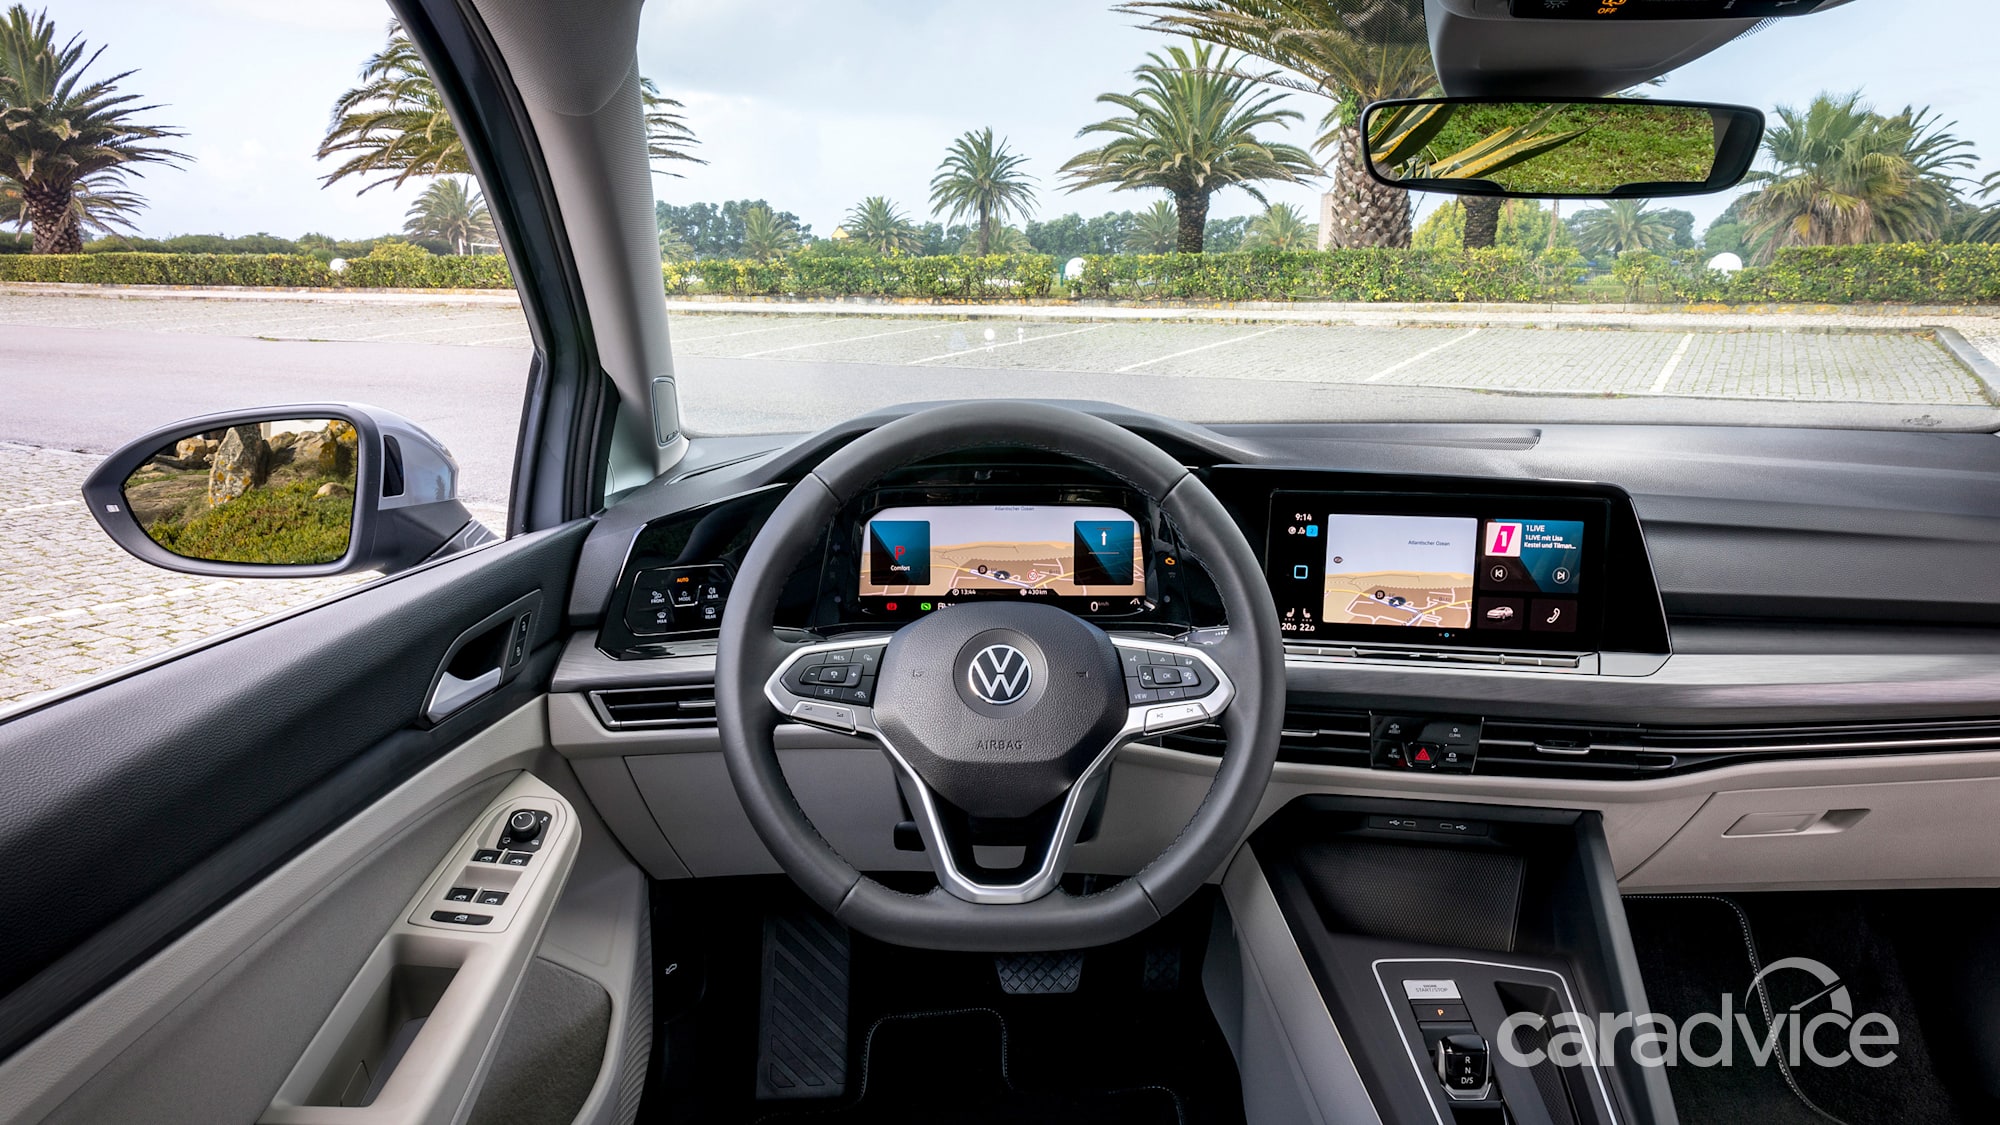 2021 Volkswagen Caddy spied | CarAdvice